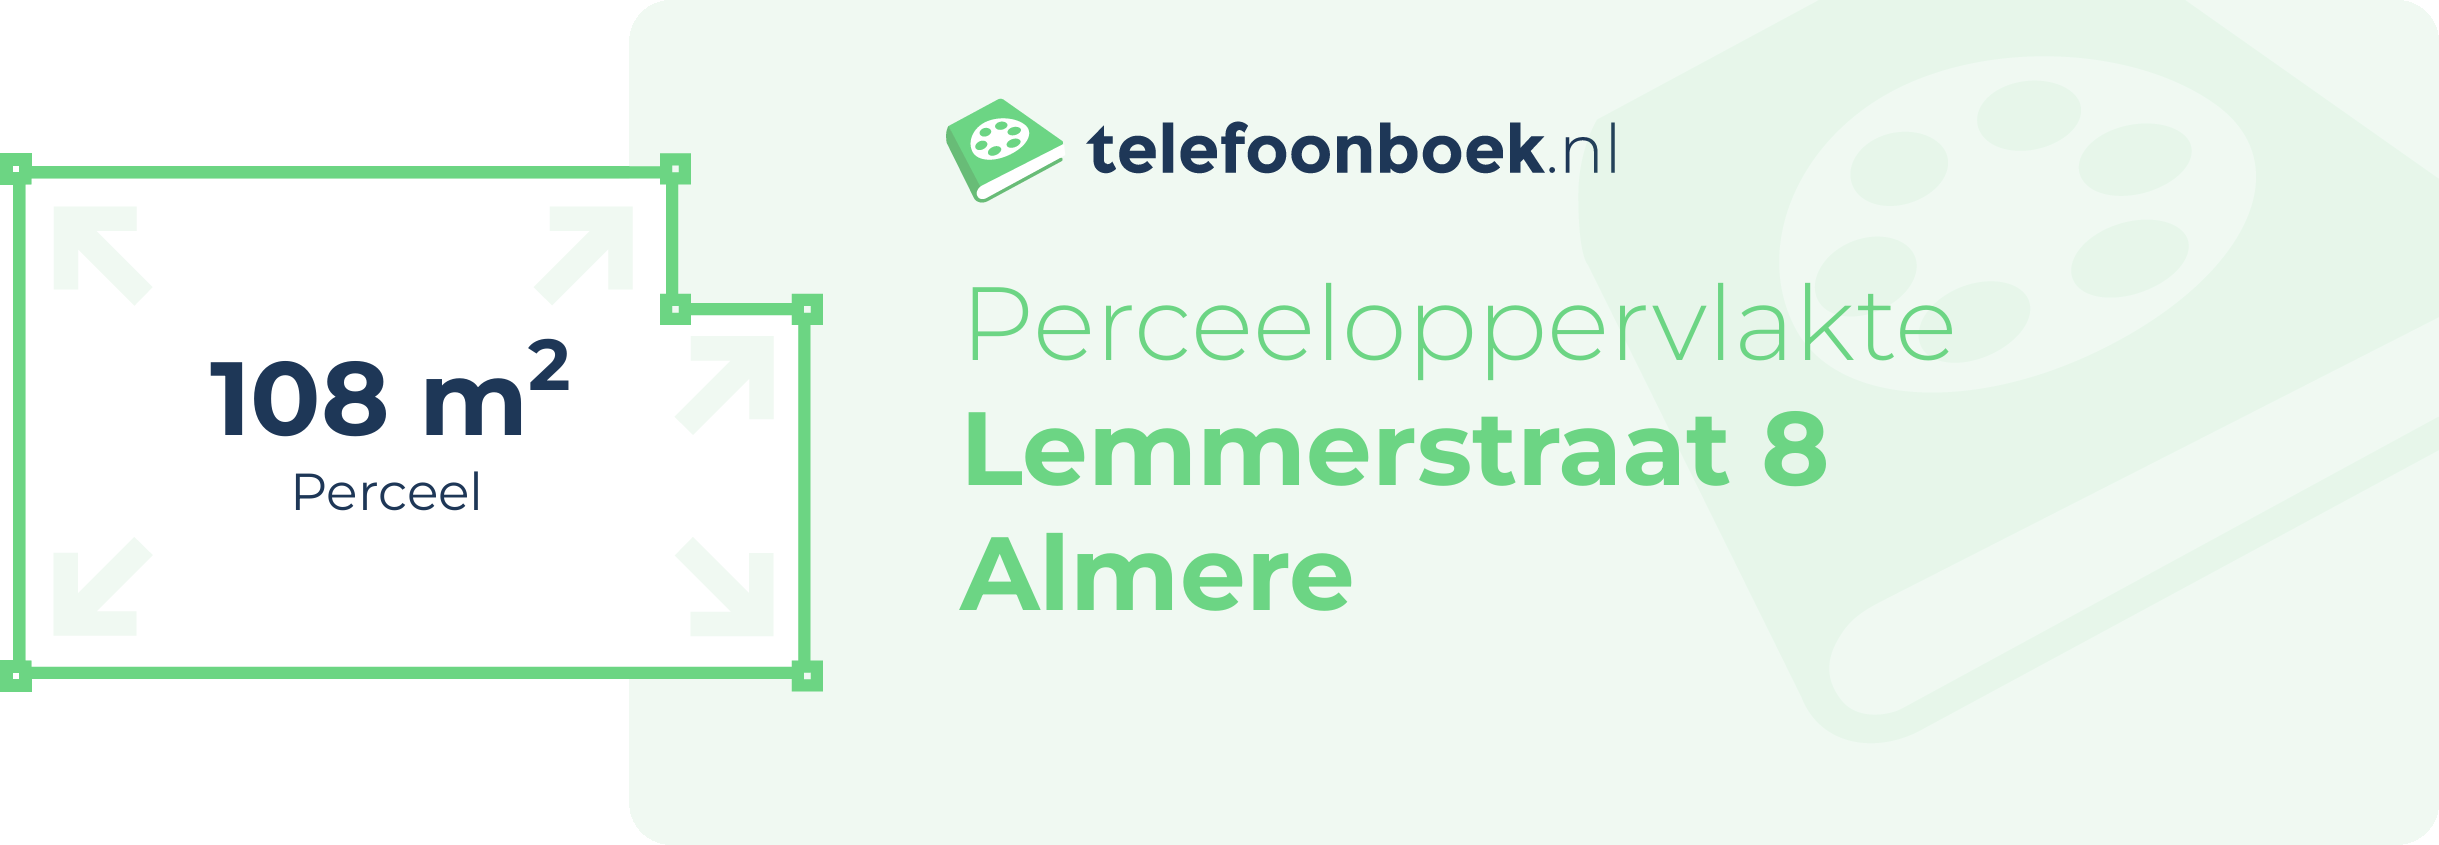 Perceeloppervlakte Lemmerstraat 8 Almere